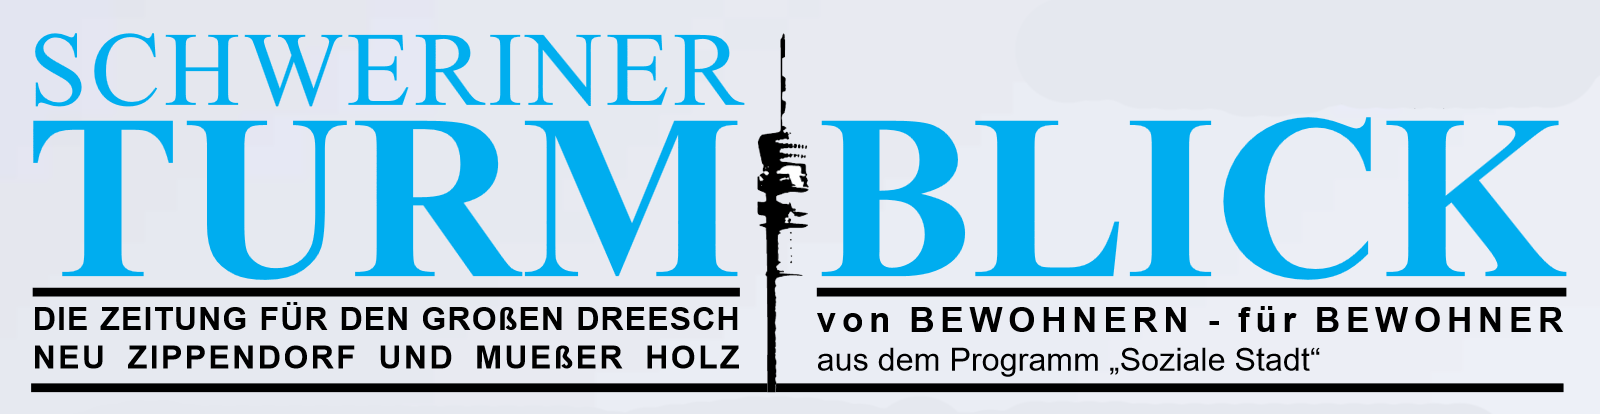 banner Schweriner Turmblick